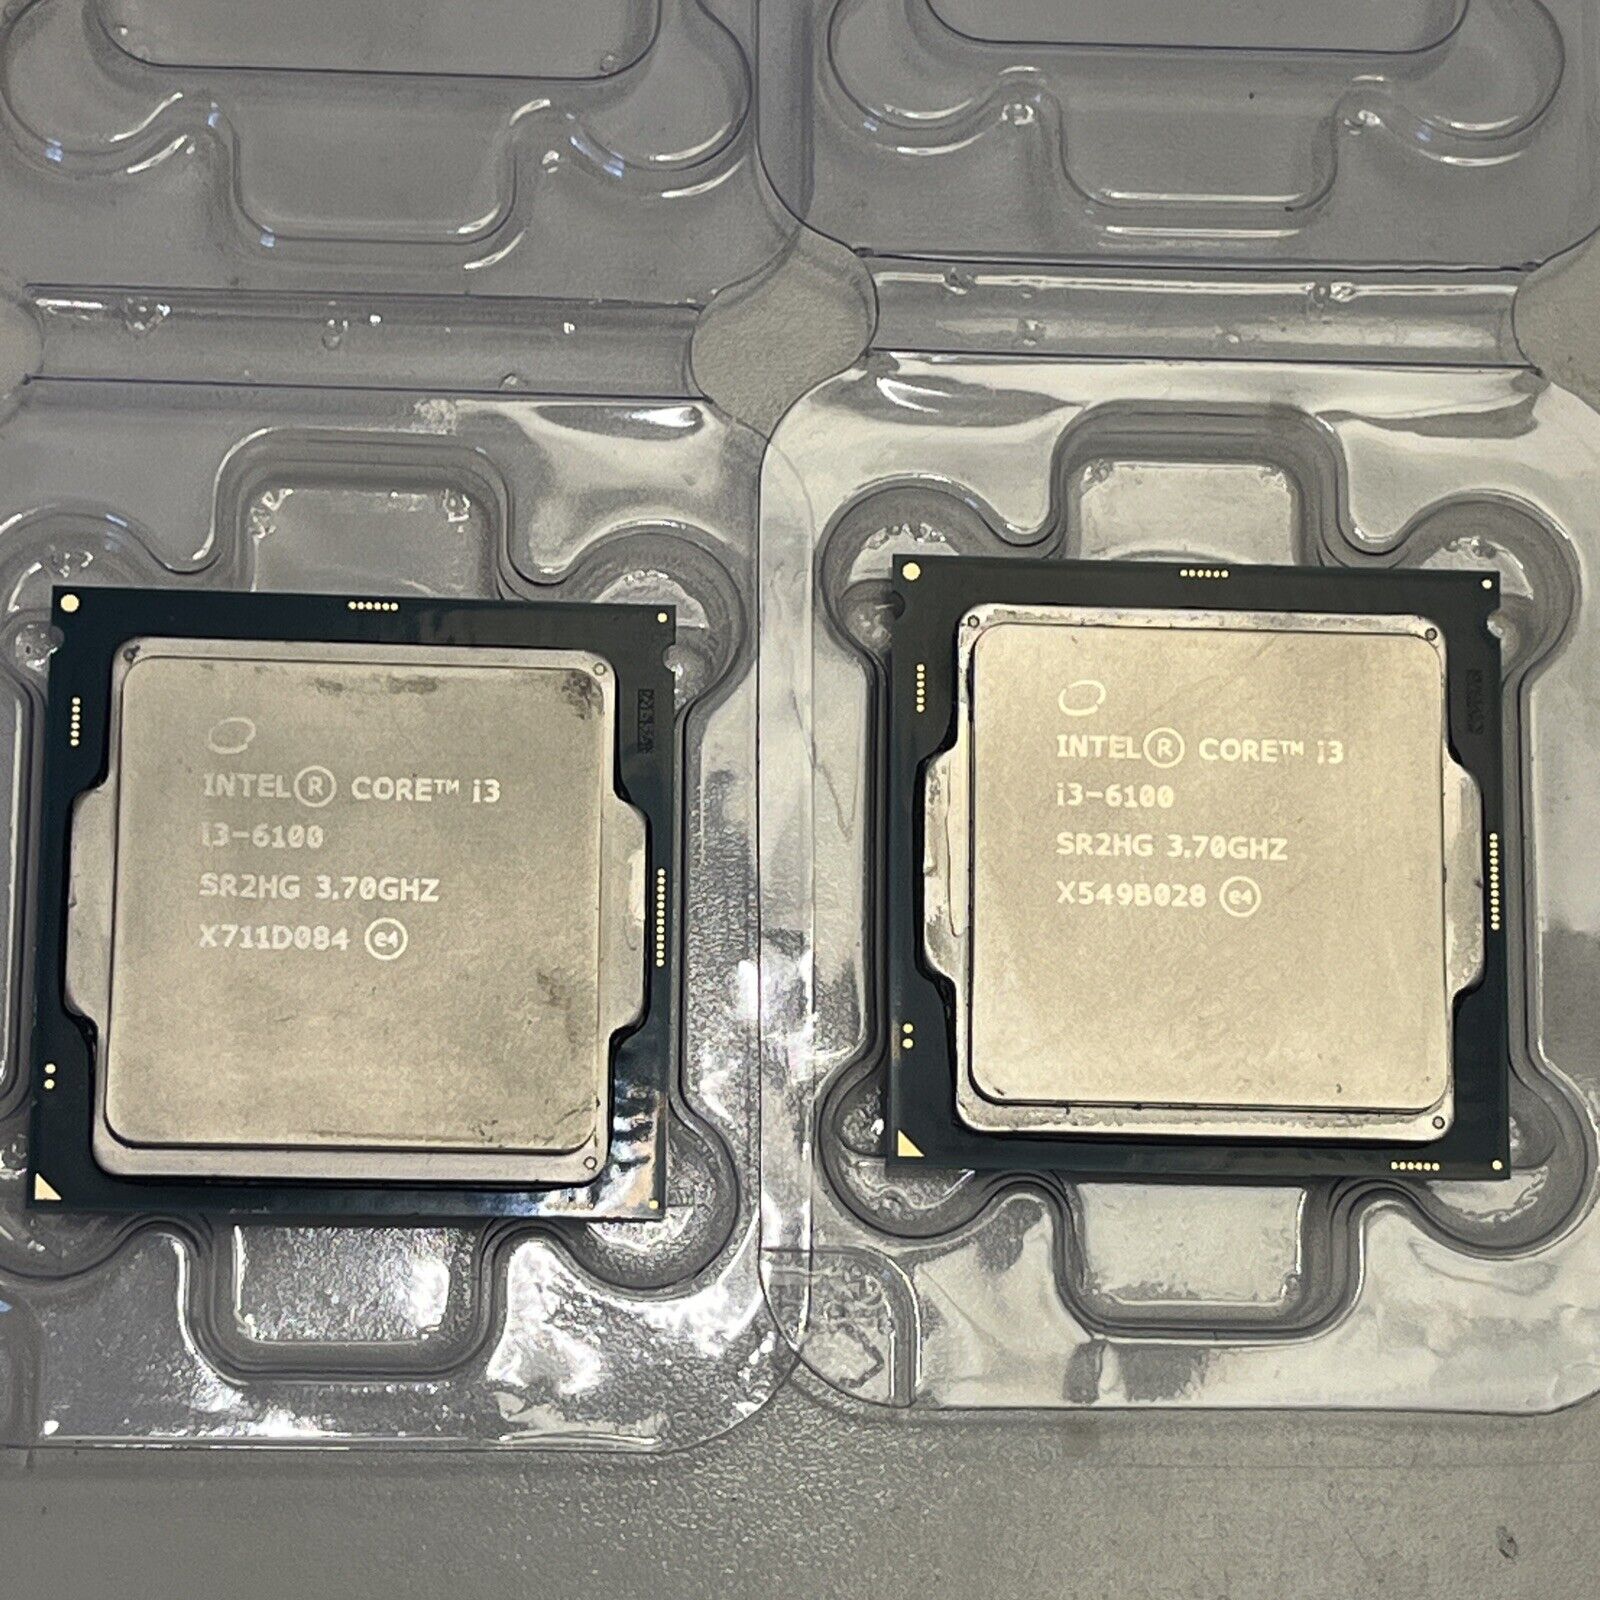 Lot of 2 - Intel Core i3-6100 3.70GHz SR2HG Dual-Core 3MB LGA 1151/Socket H4 CPU